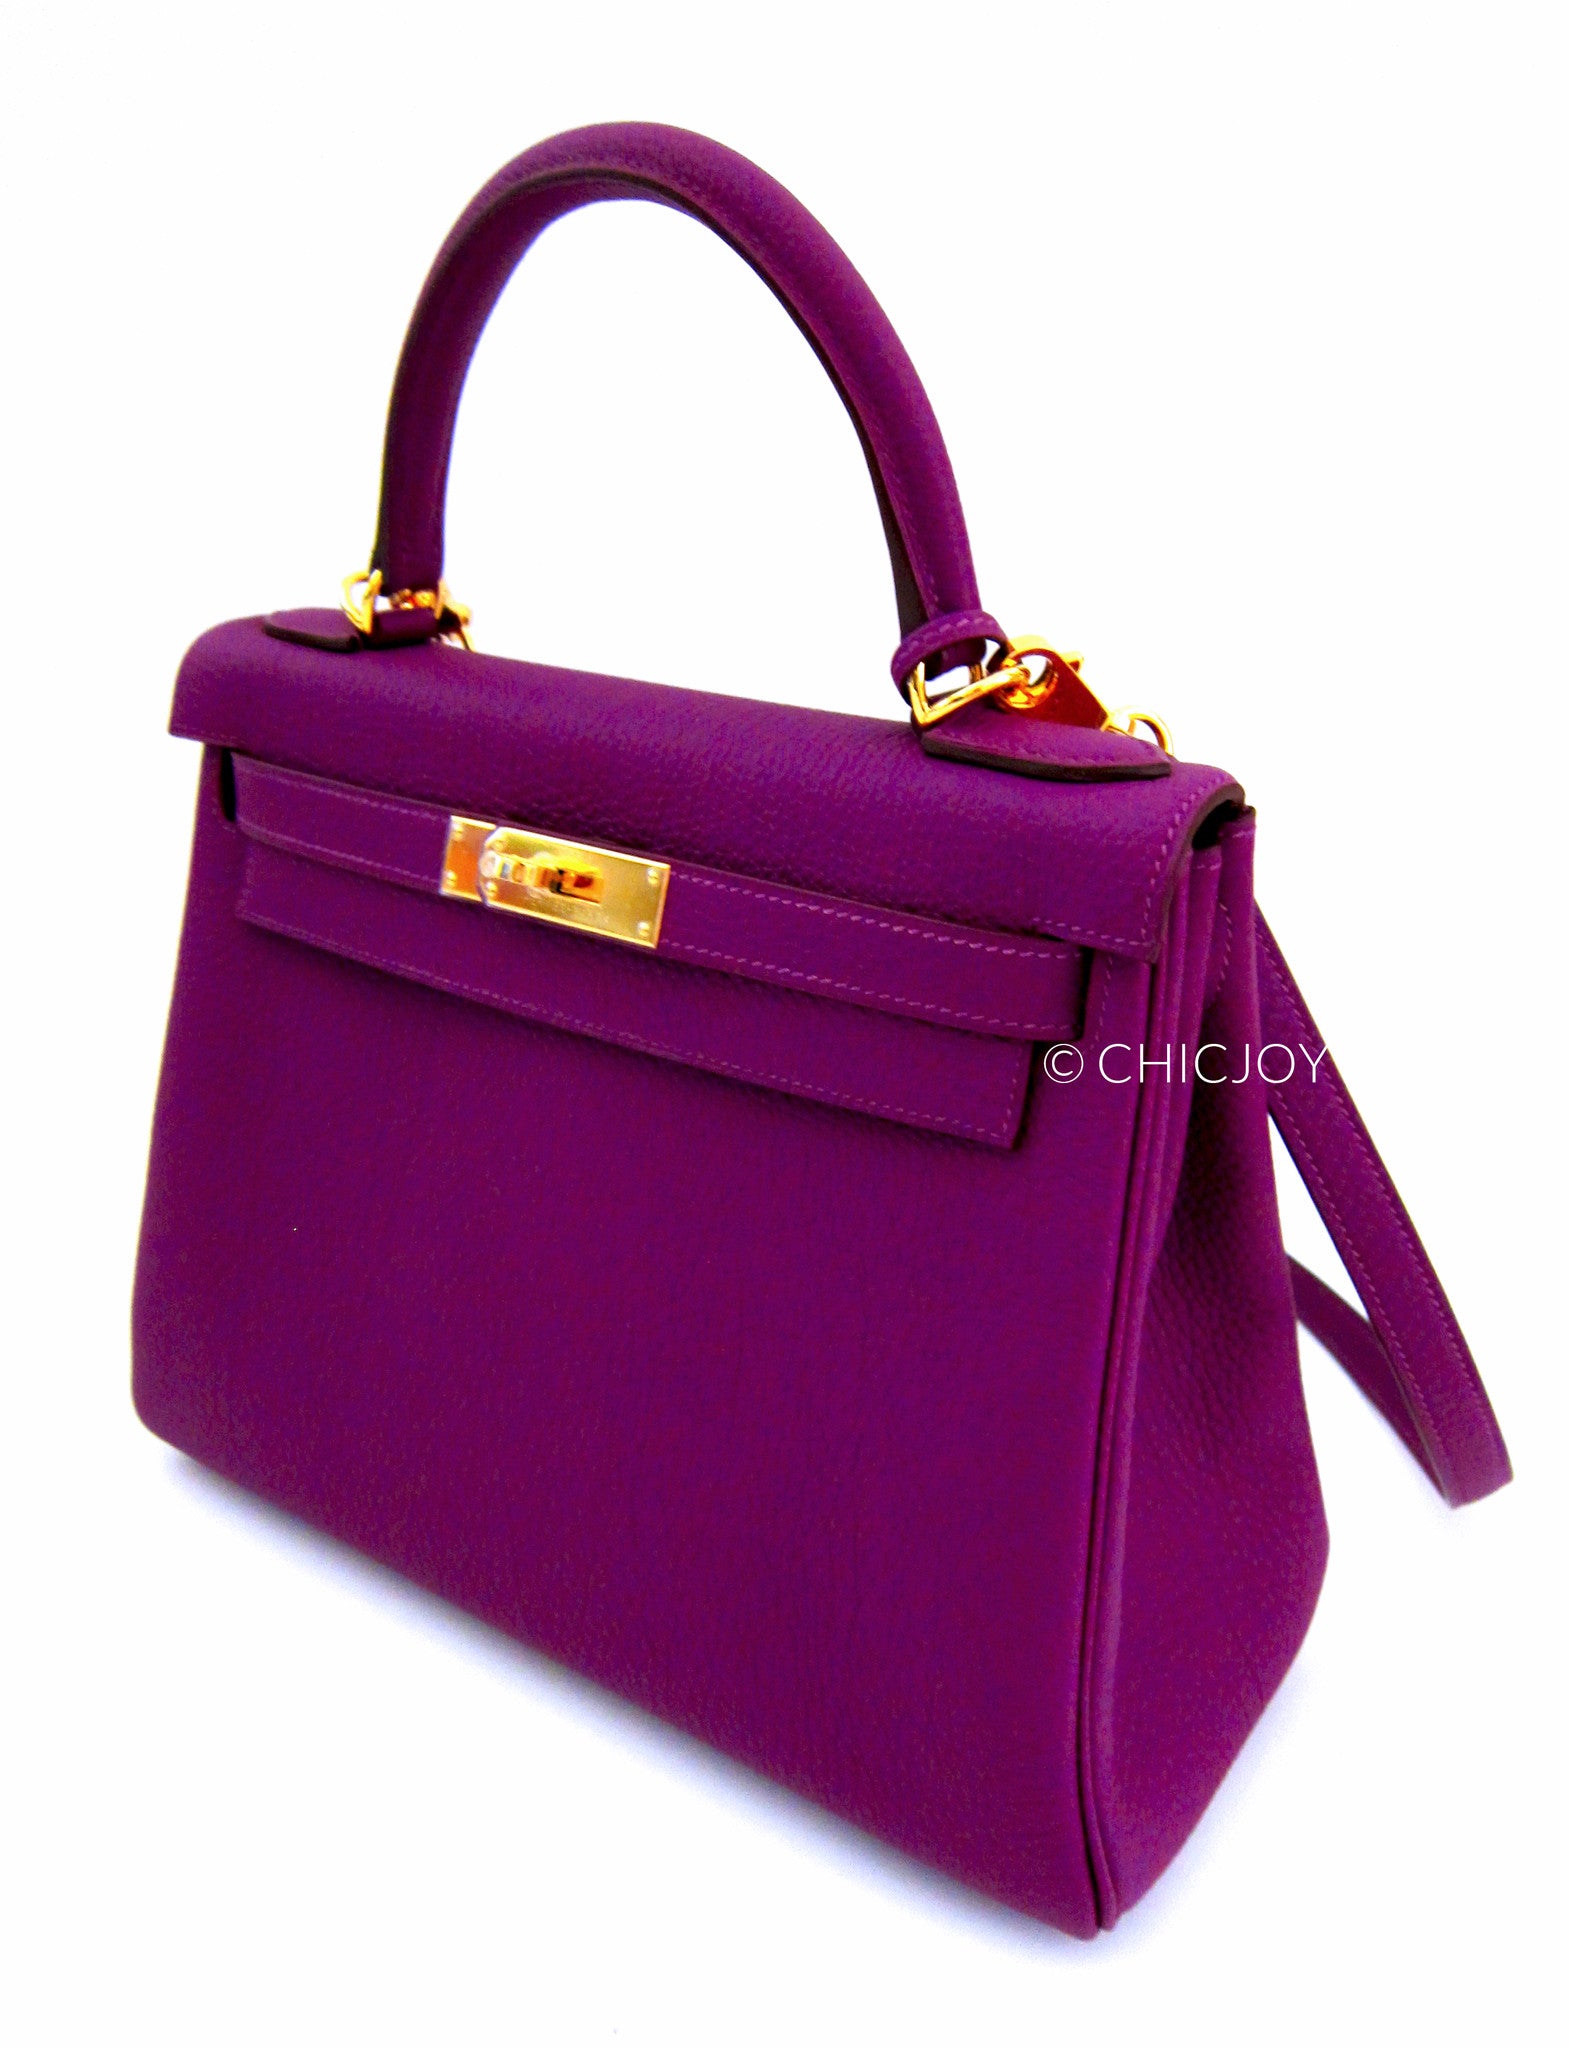 Anemone Kelly 25 Retourne  Togo leather, Shades of purple, Hermes